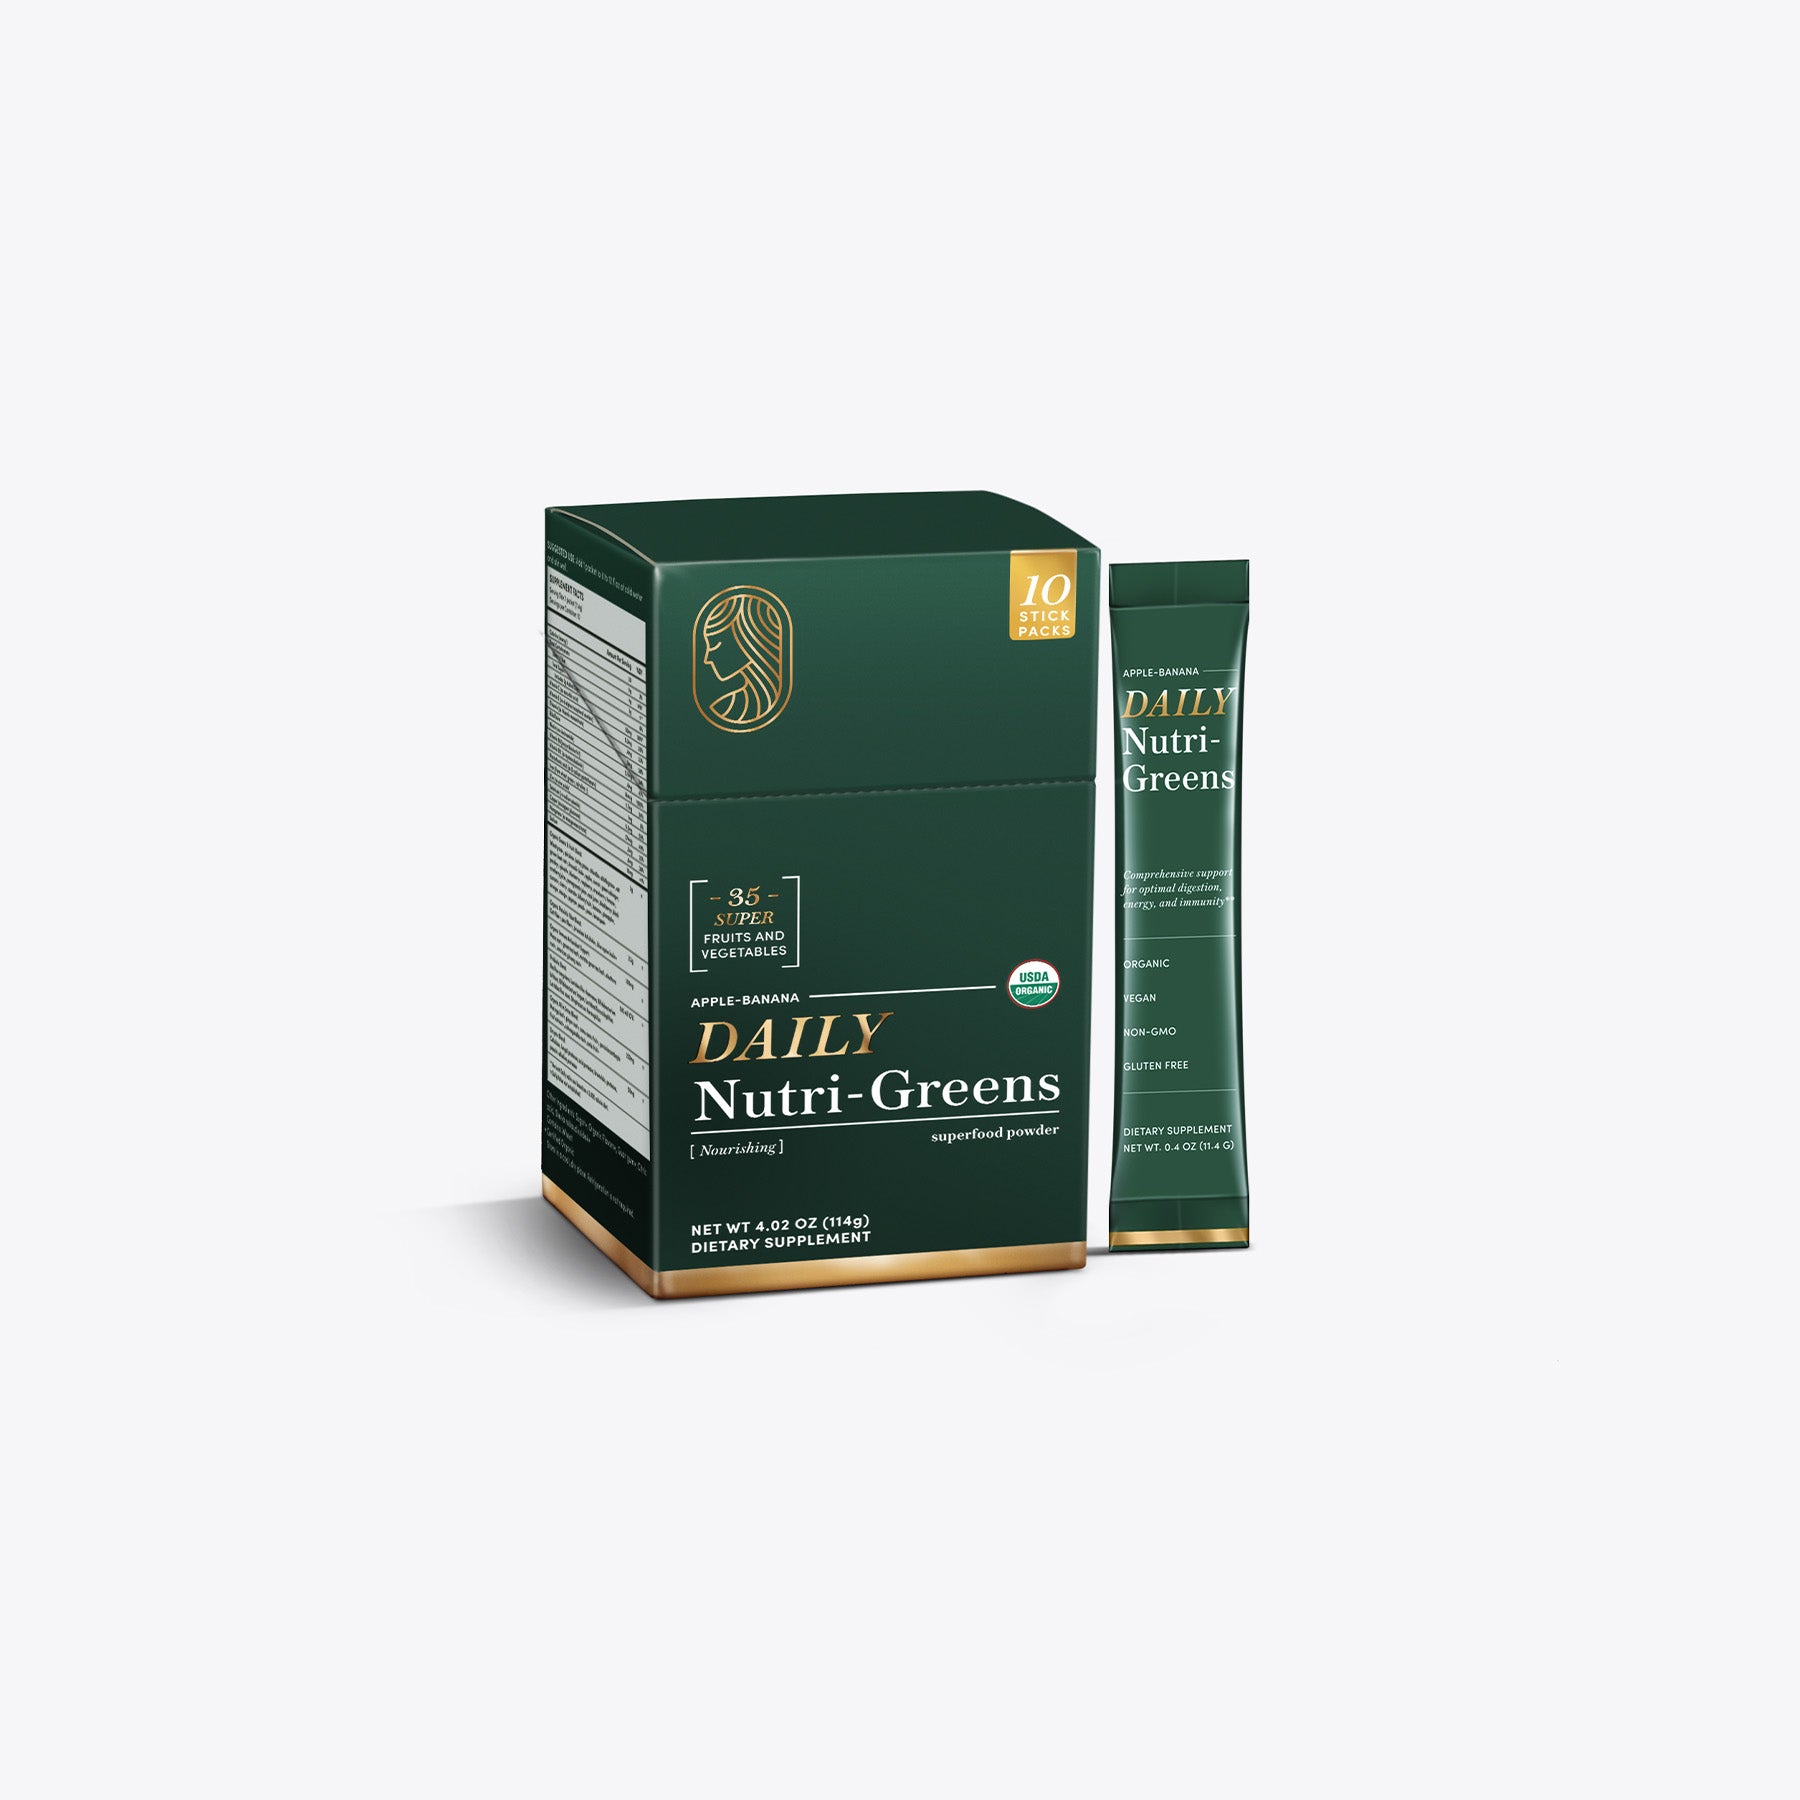 10 Daily Nutri-Greens Stick Packs